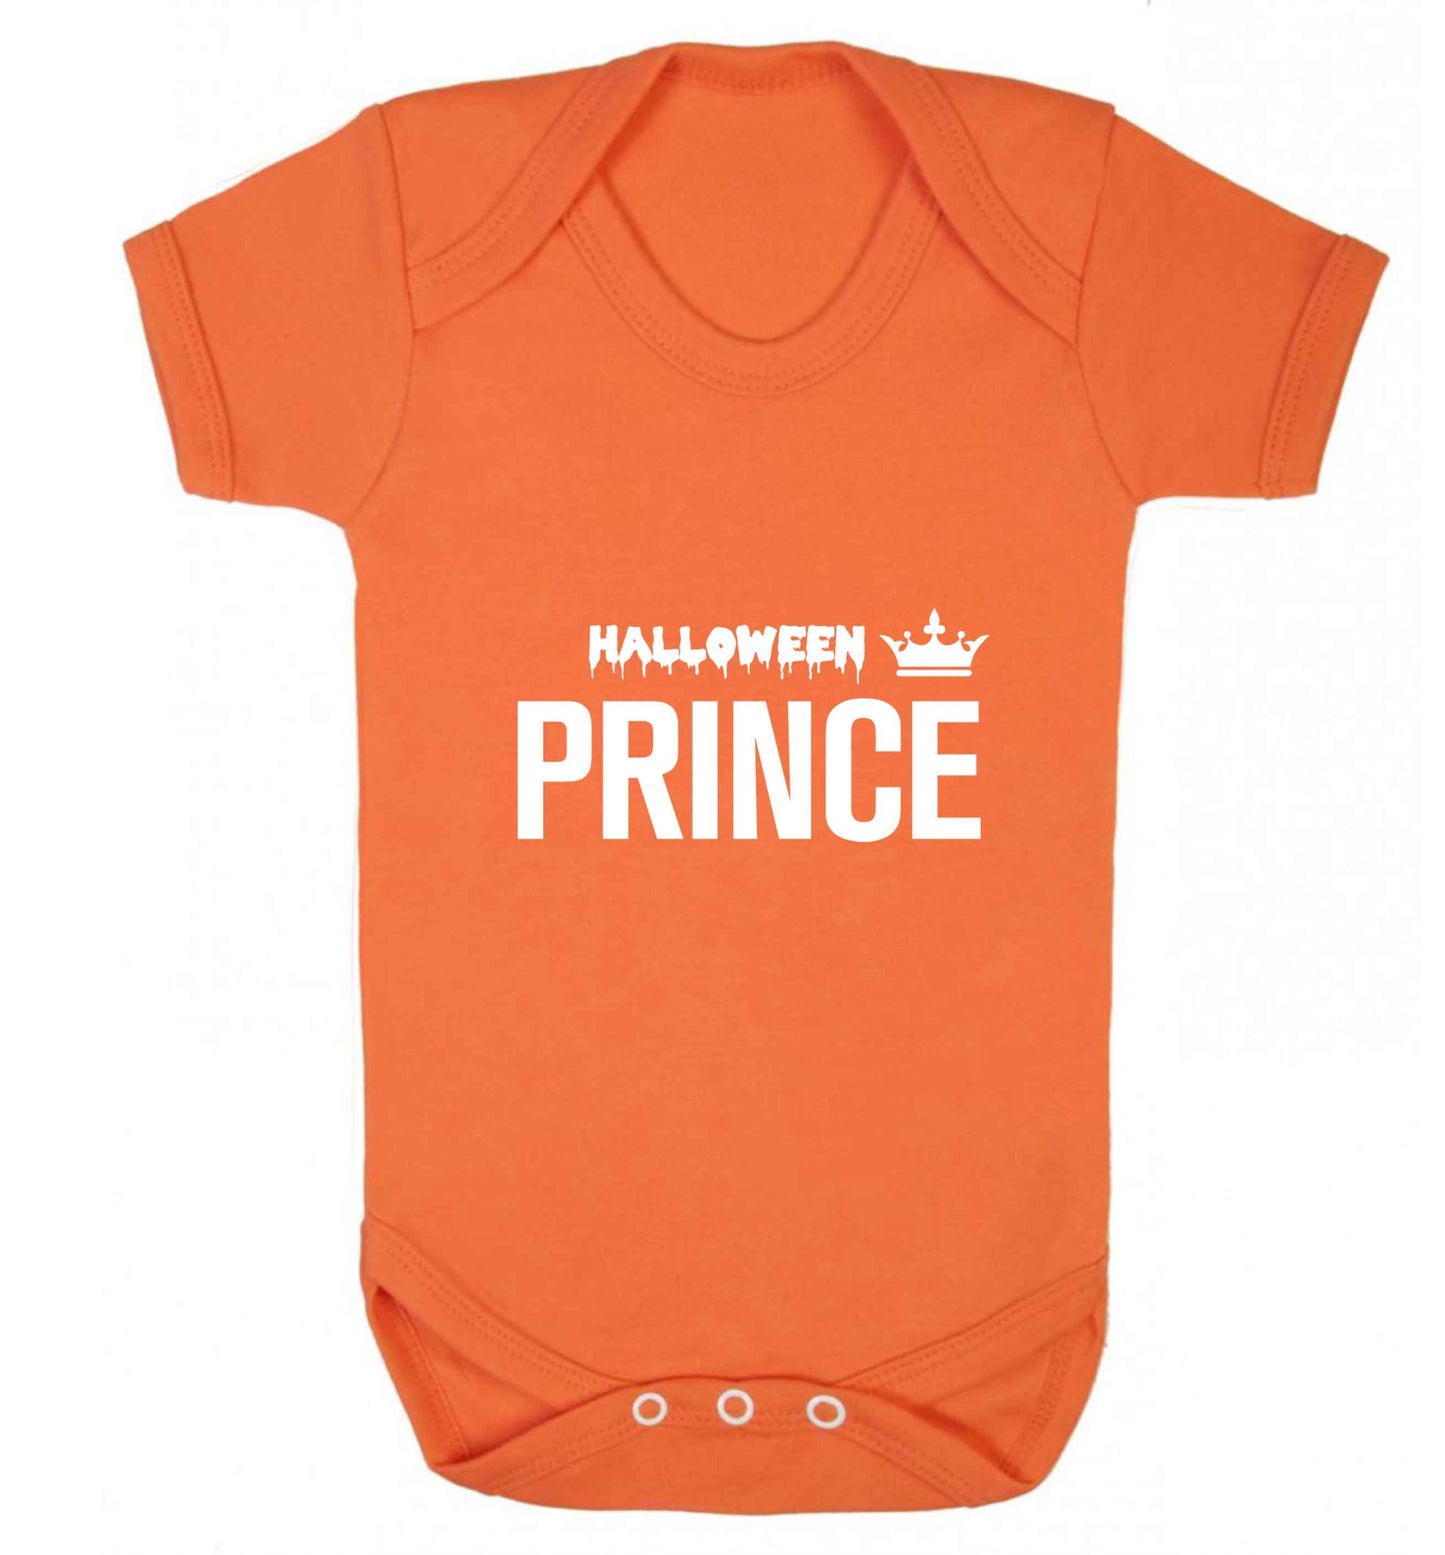 Halloween prince baby vest orange 18-24 months